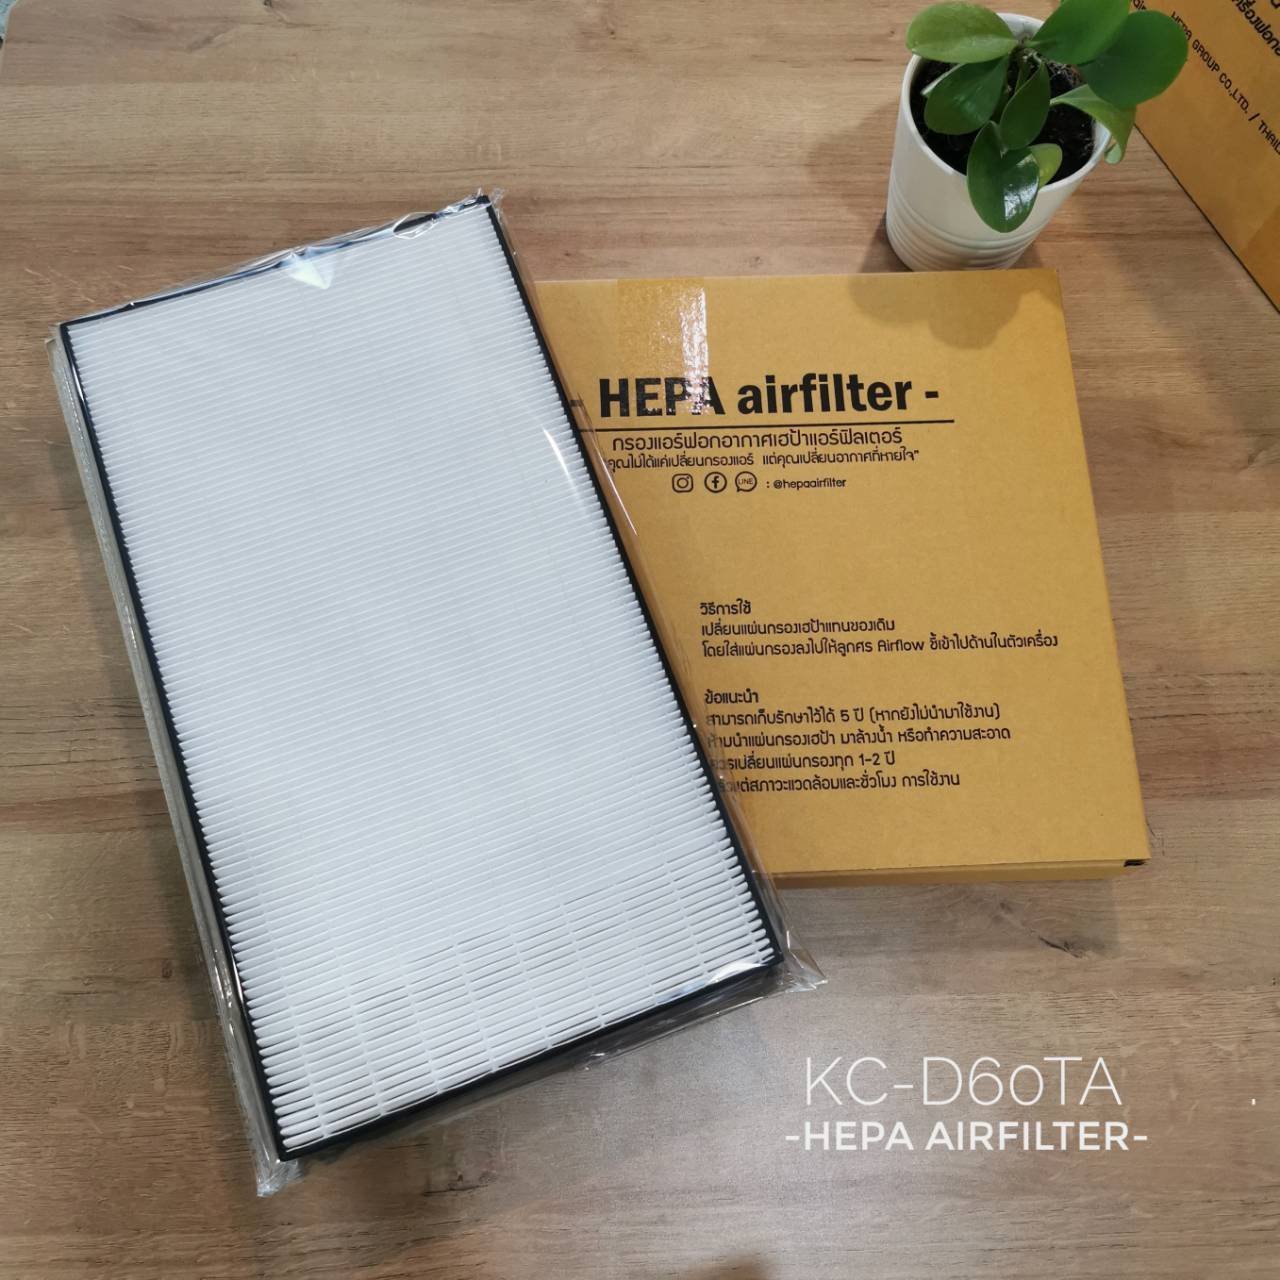 HEPA airfilter-KC-D60TA,KC-G60TA : HEPA airfilter กรองอากาศสำหรับเครื่องฟอก (ขนาด 23.4 x 43.2 x 2.7 cm)